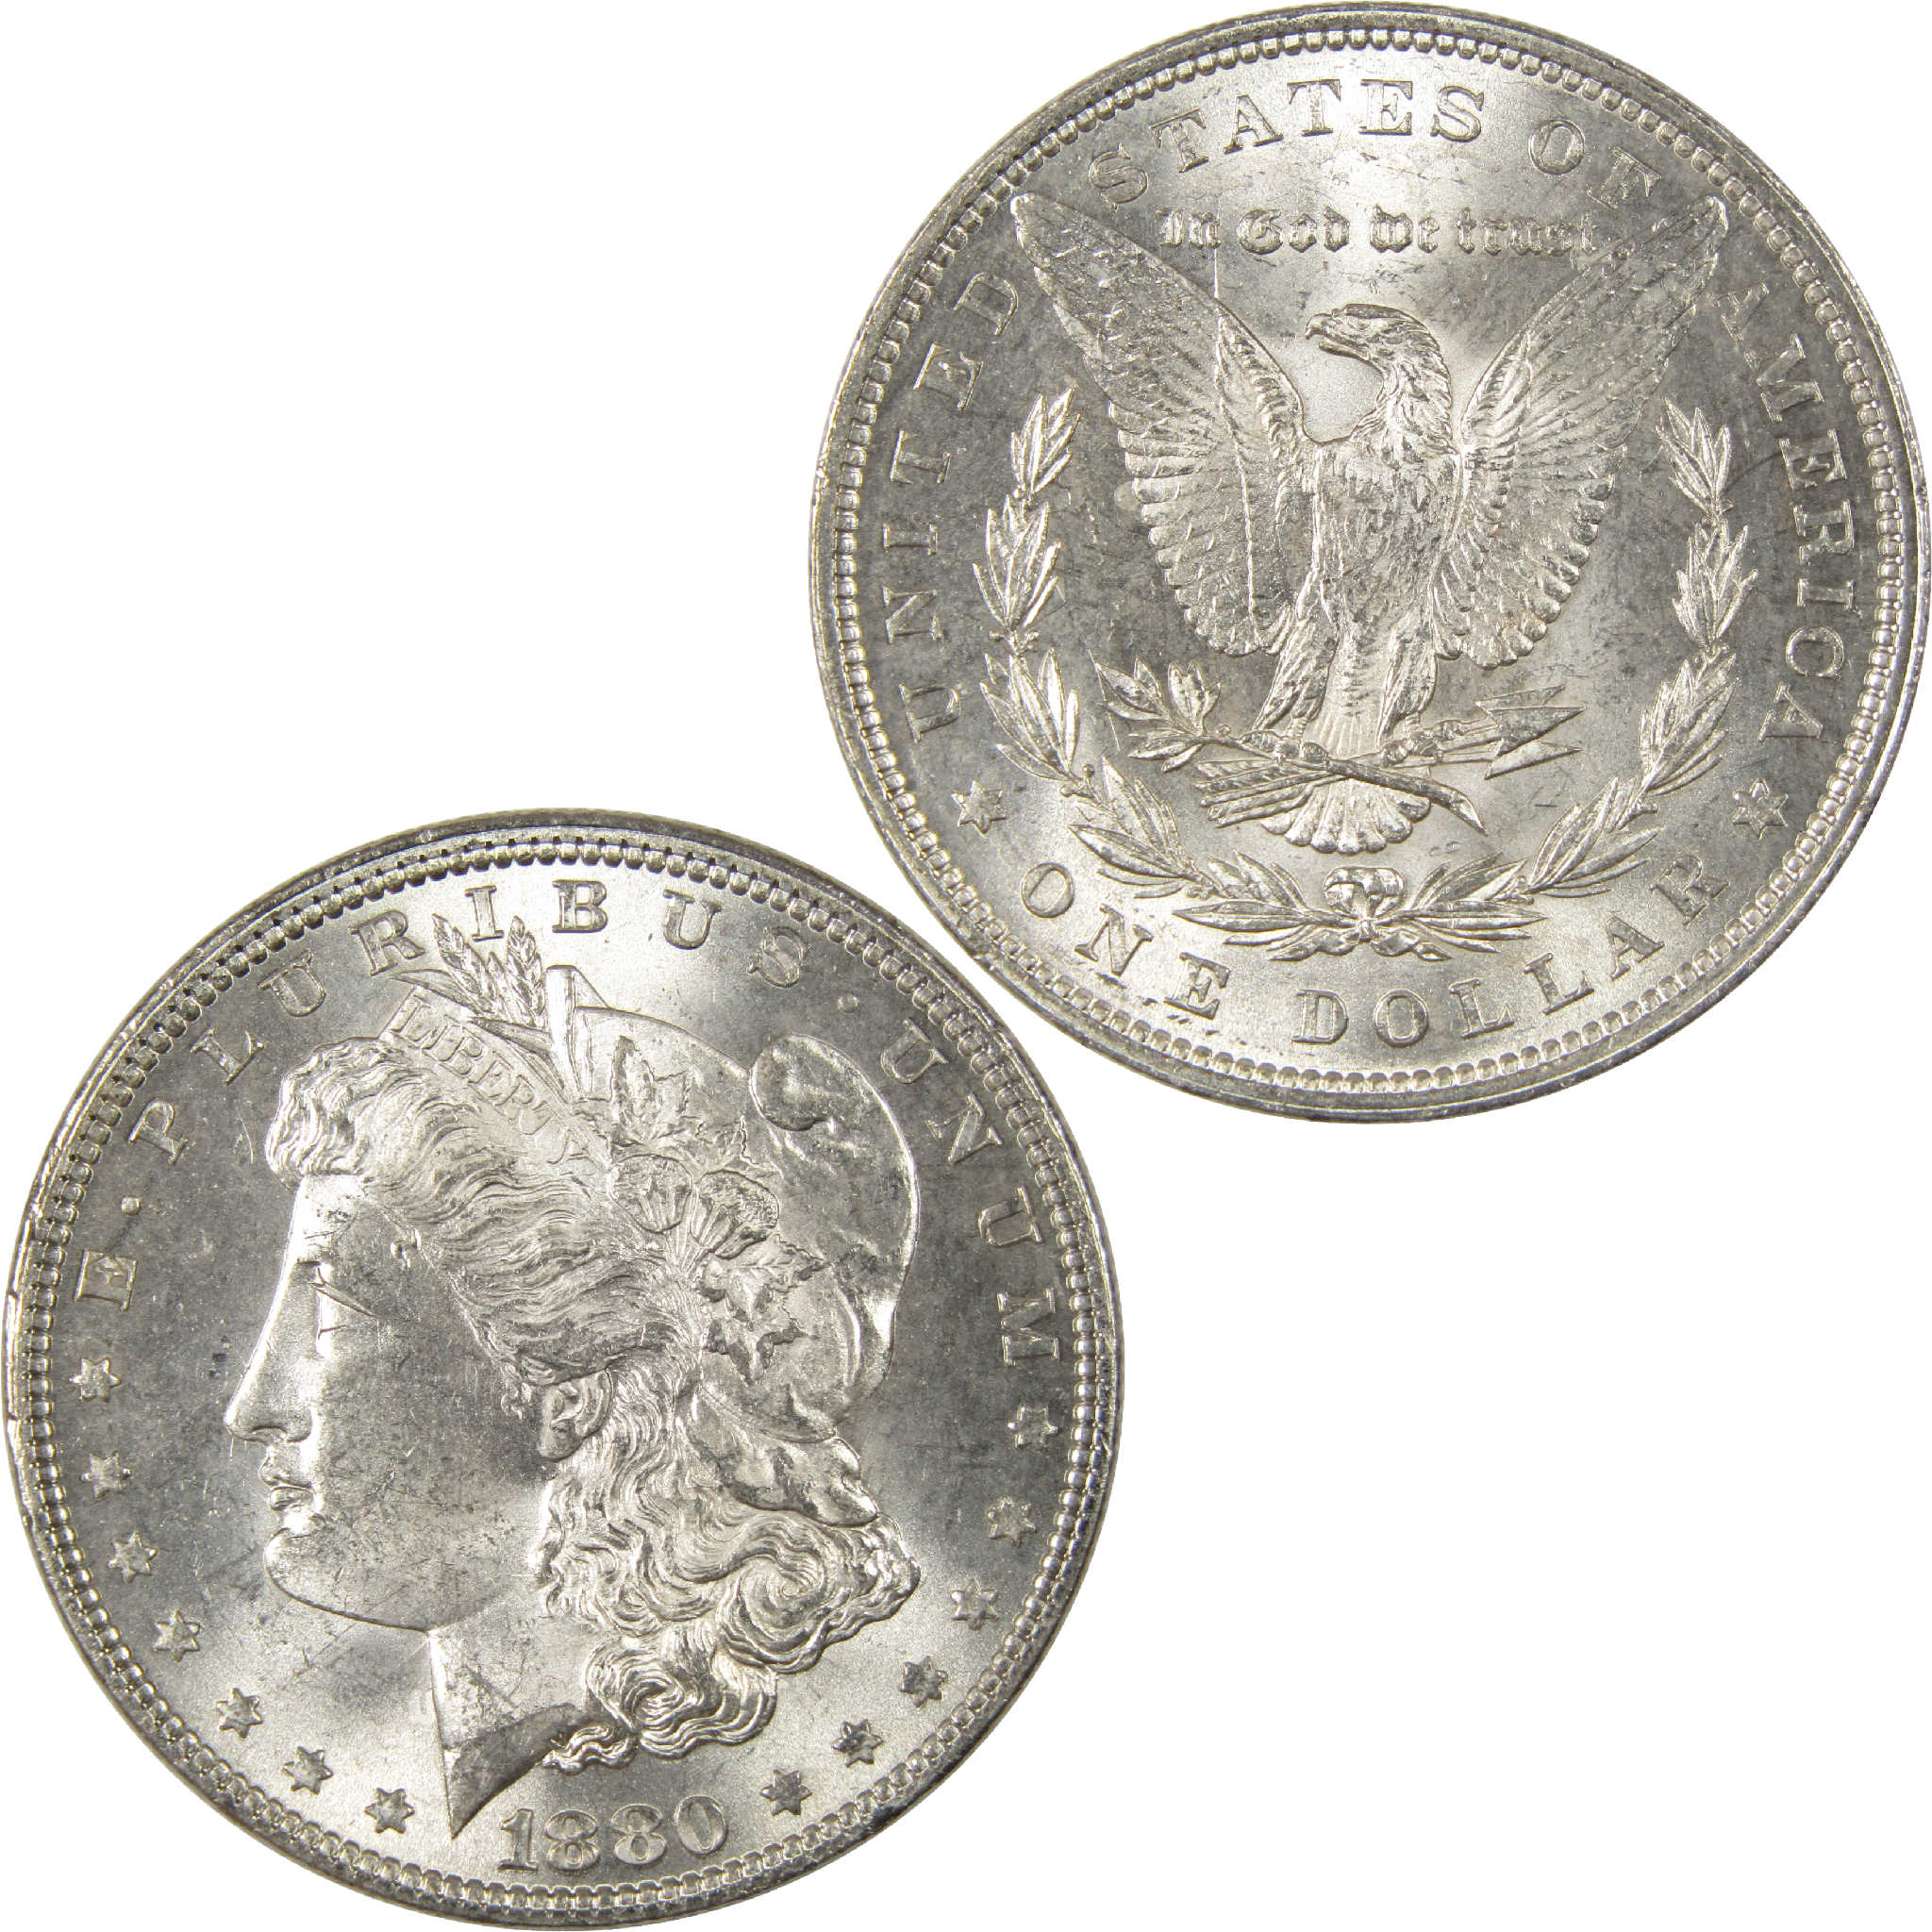 1880 Morgan Dollar BU Choice Uncirculated Silver $1 Coin - Morgan coin - Morgan silver dollar - Morgan silver dollar for sale - Profile Coins &amp; Collectibles